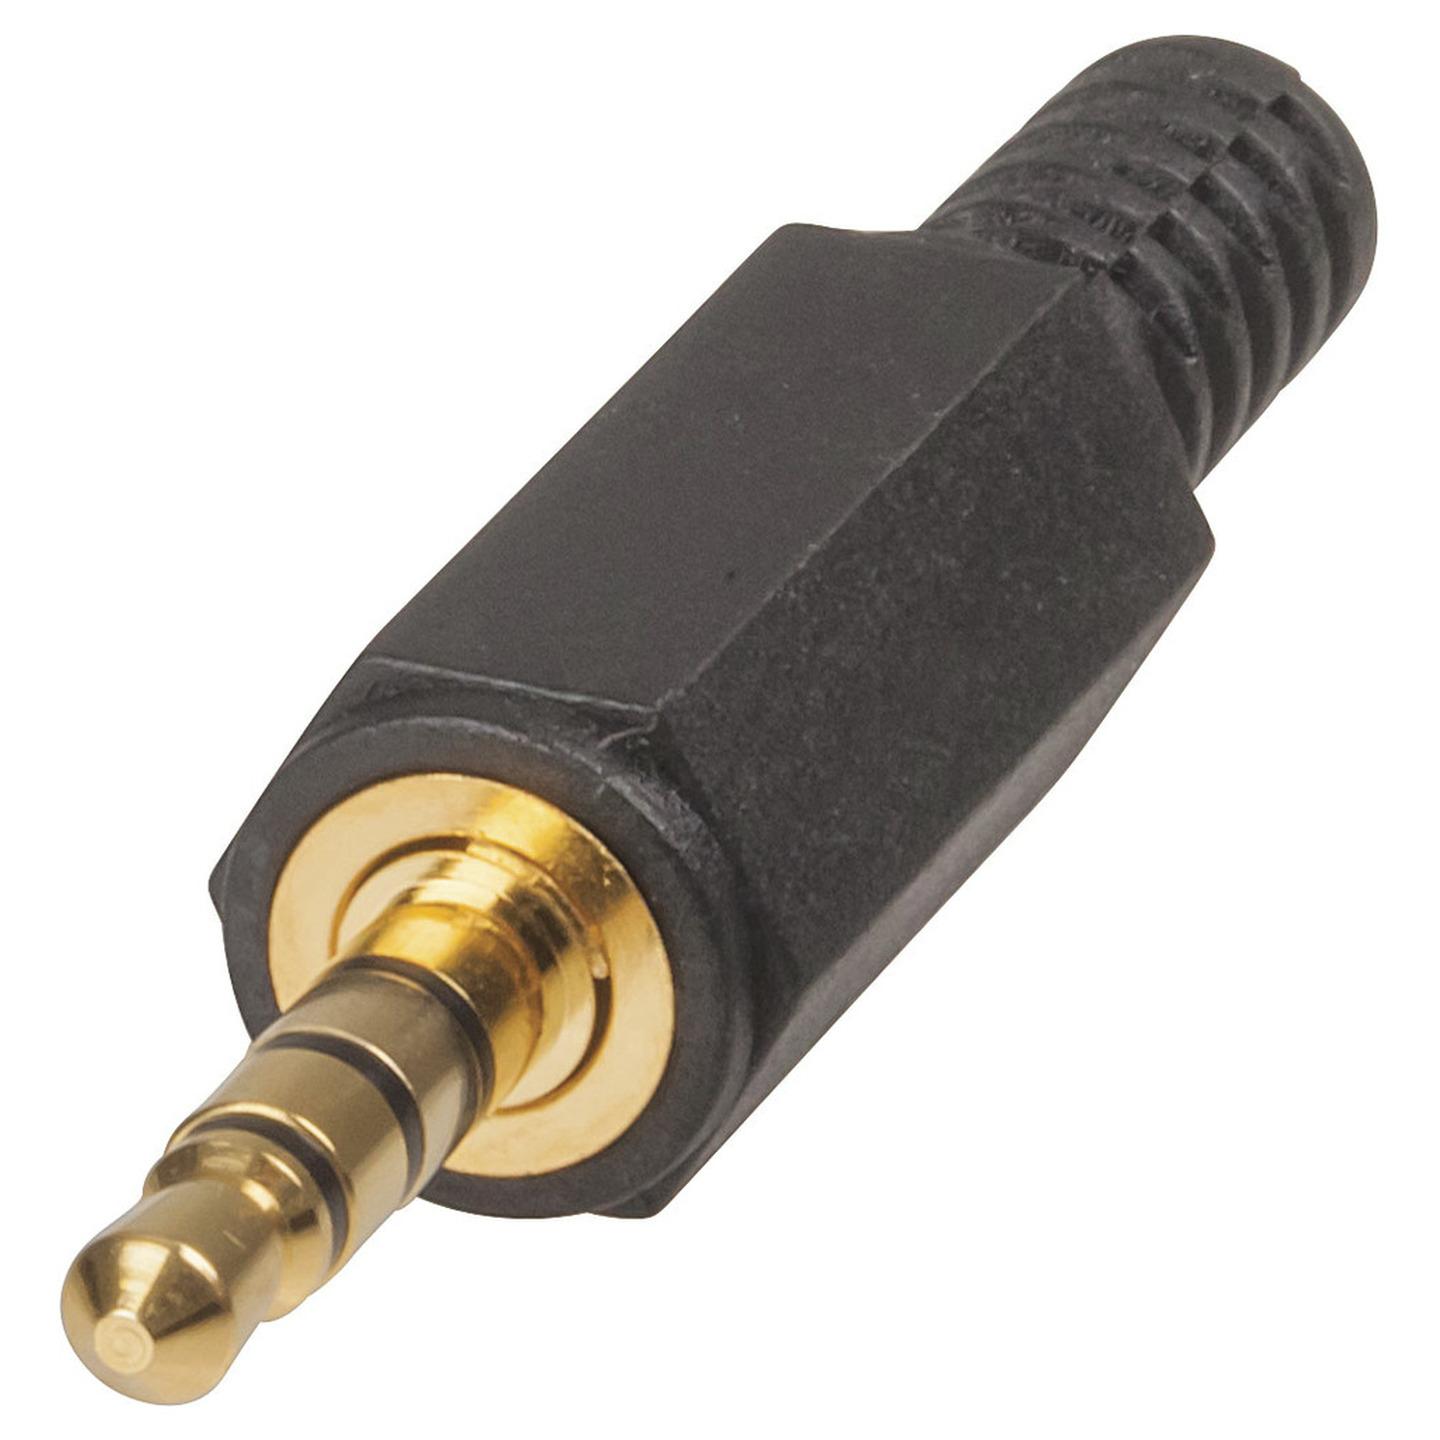 3.5mm Gold Plug - 4 pole